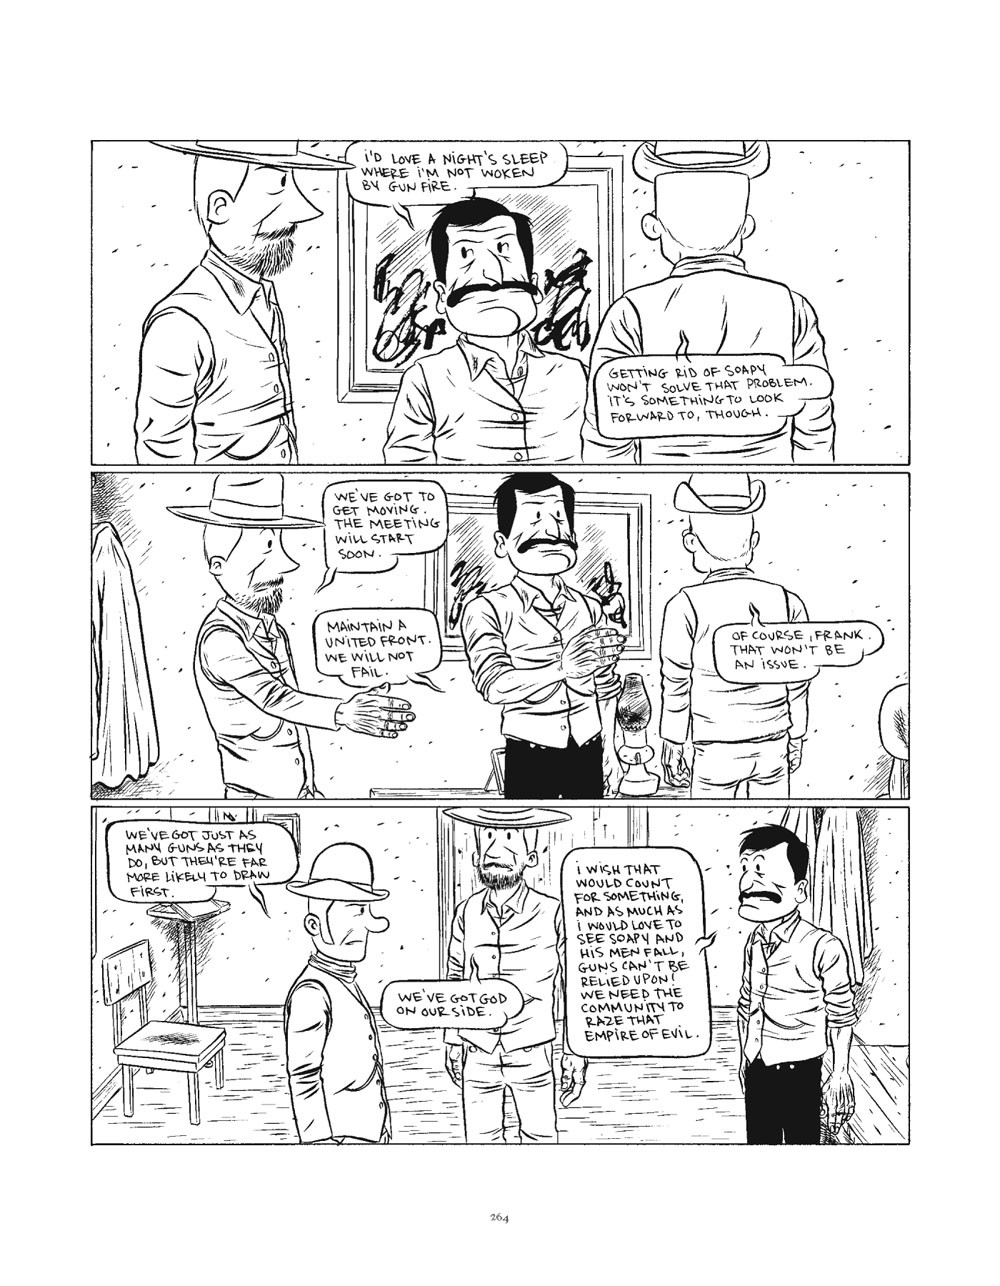 The Klondike Page 264